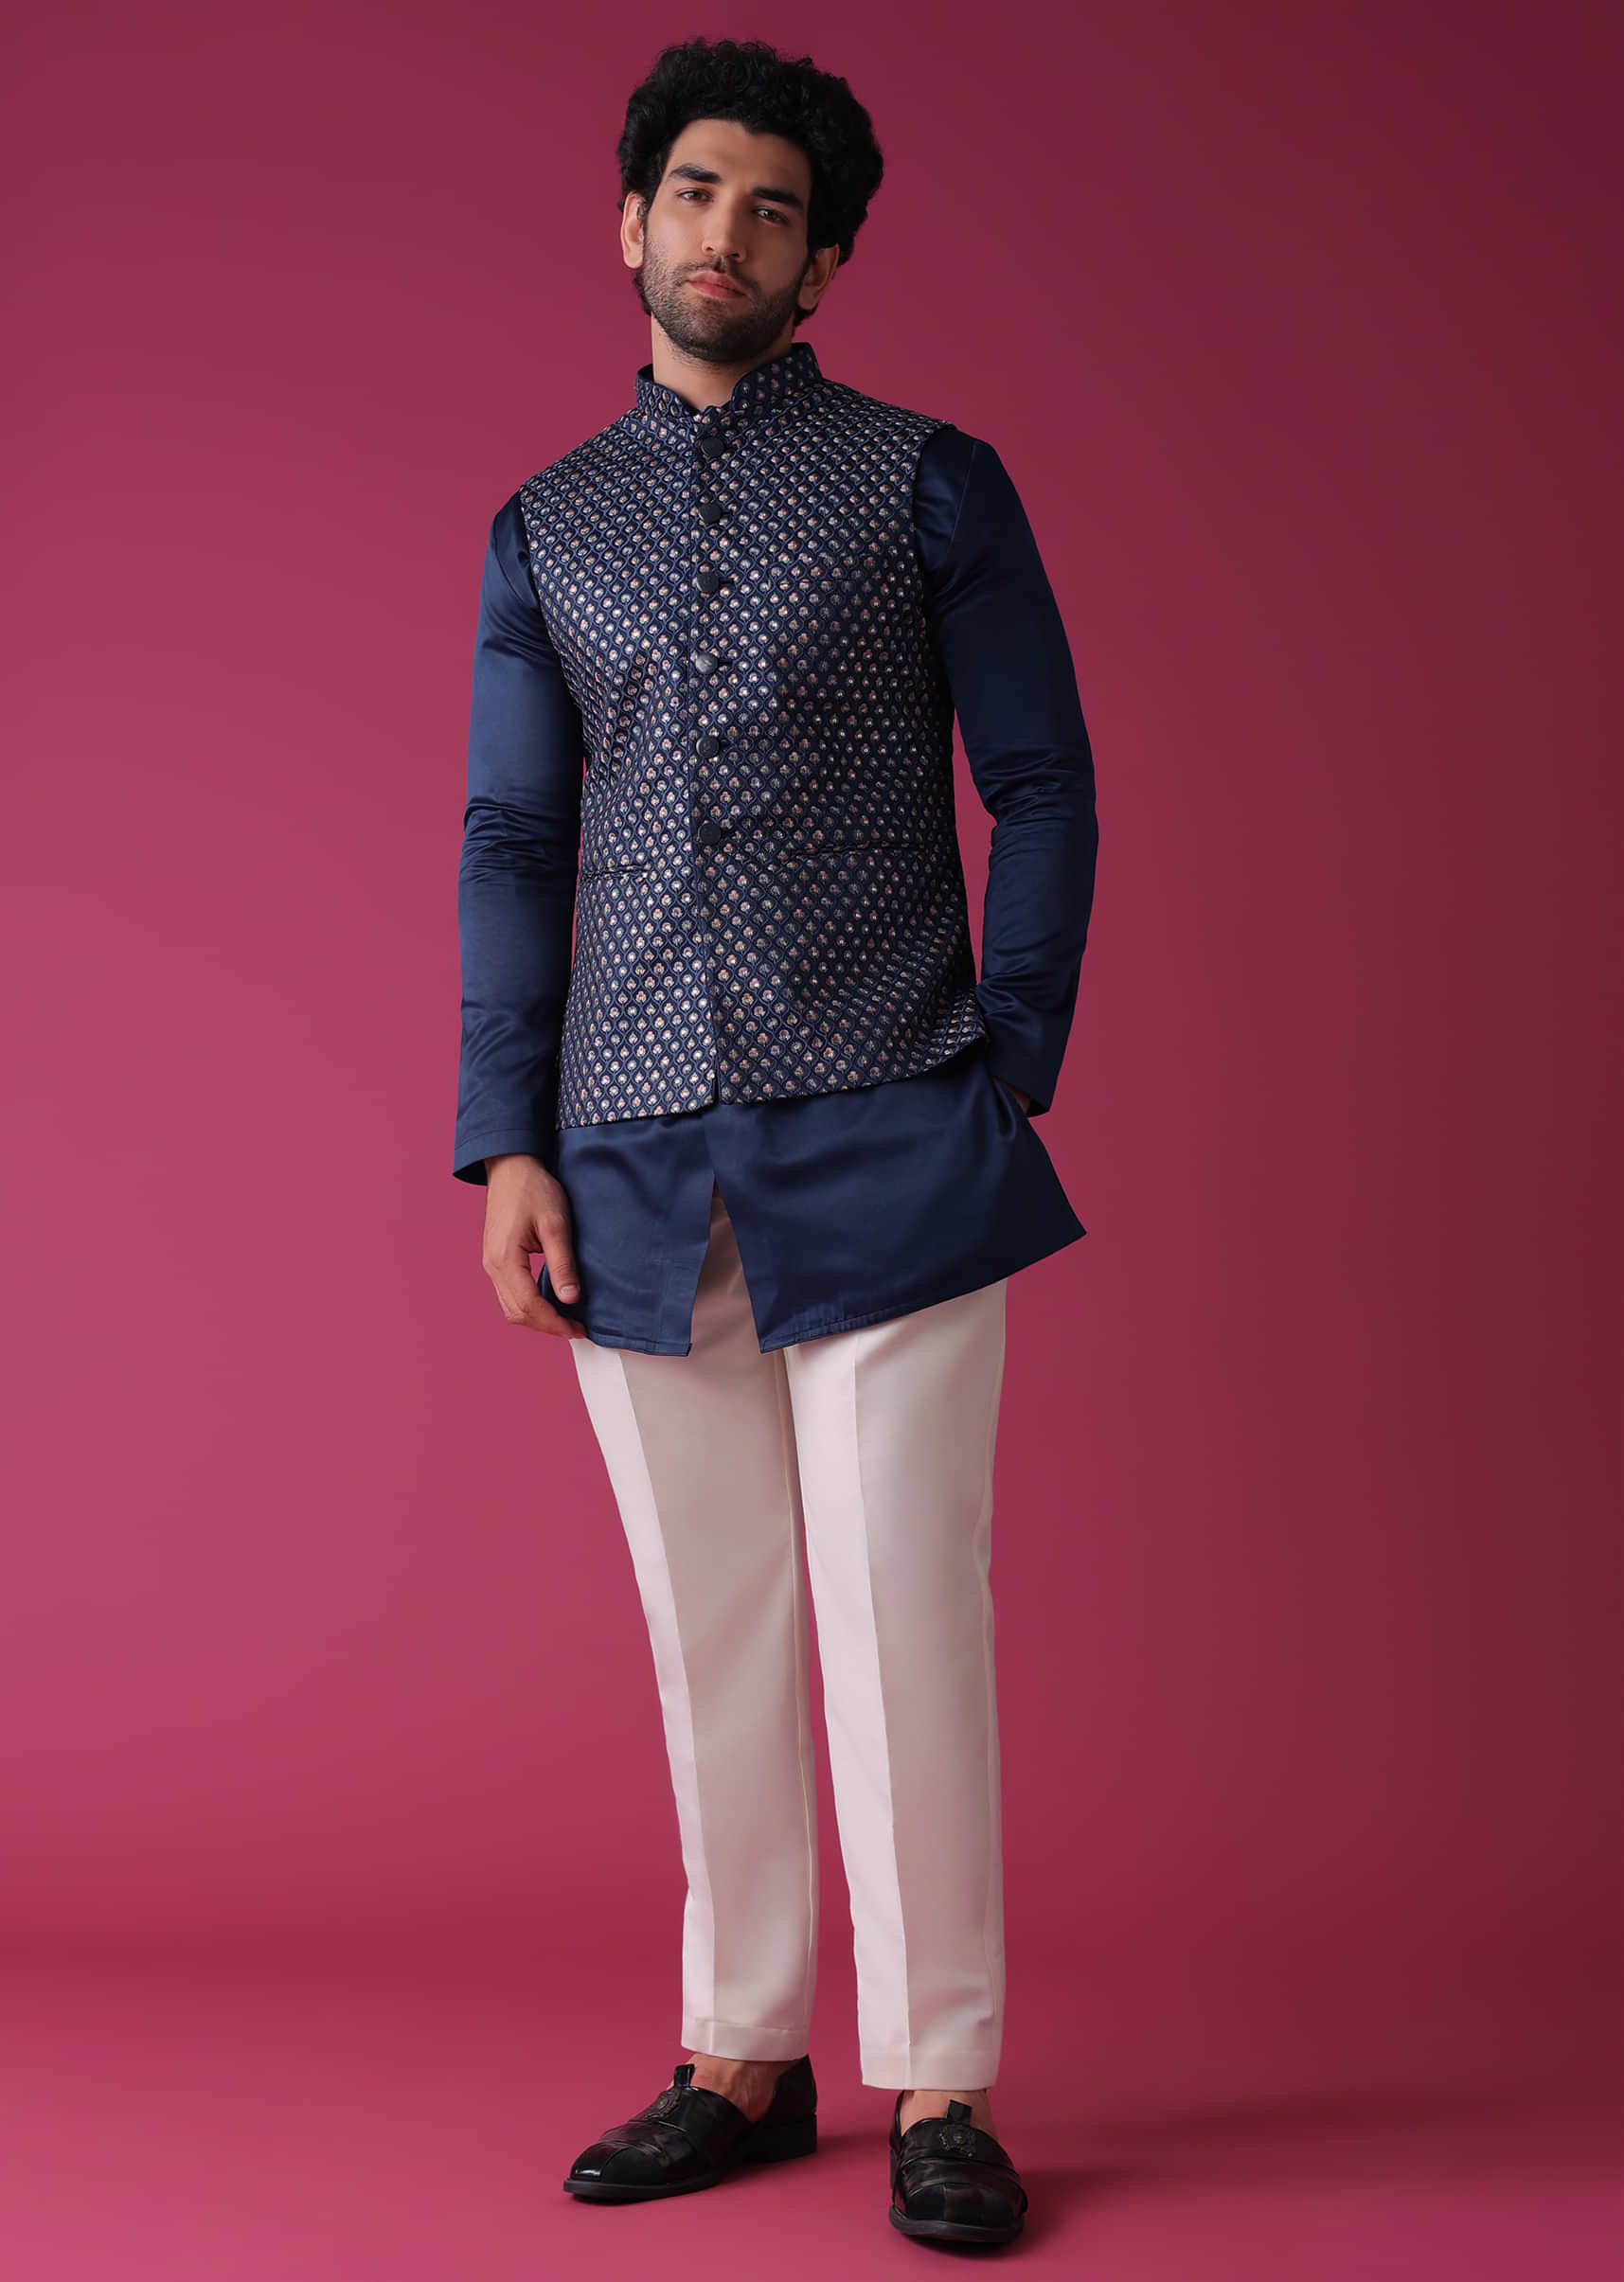 Persian Blue Jacket Kurta Set In Georgette With Detailed Threadwork pattern